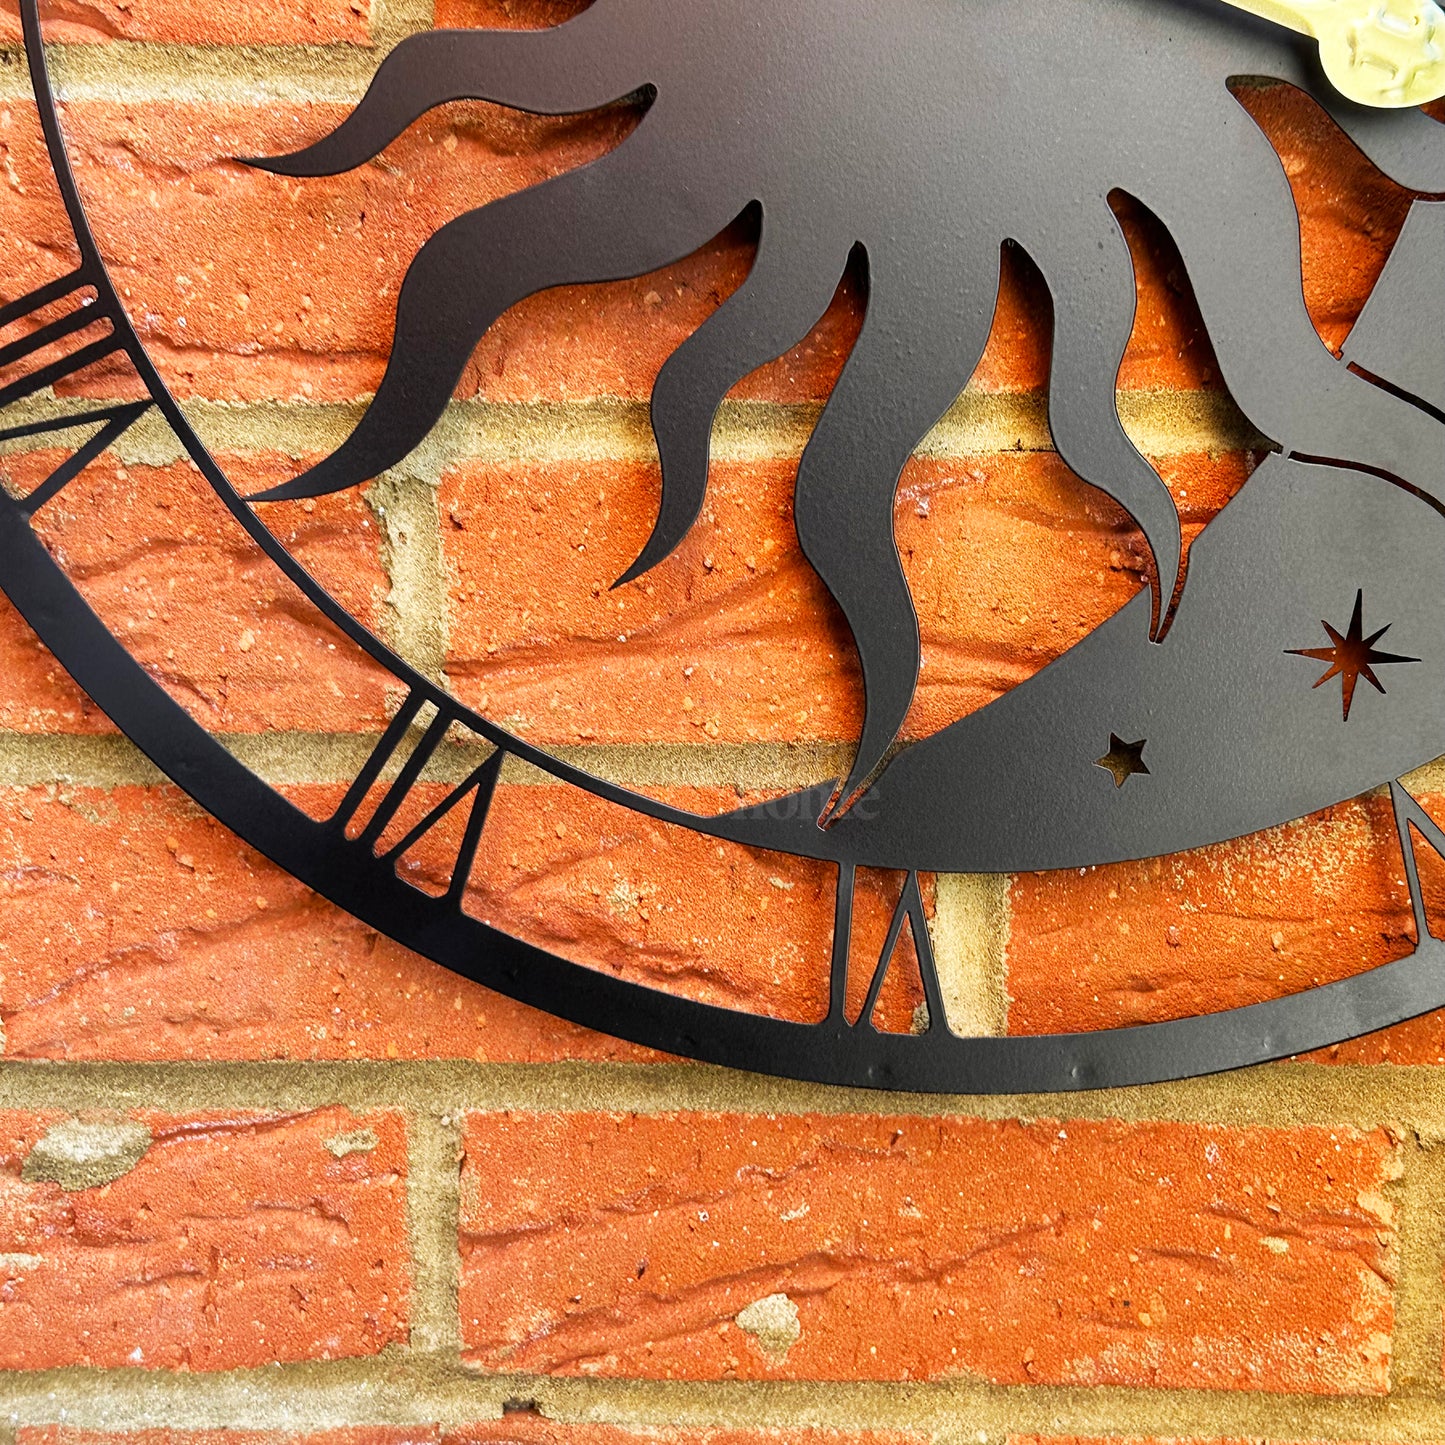 Sun & Moon Silhouette Outdoor Wall Clock